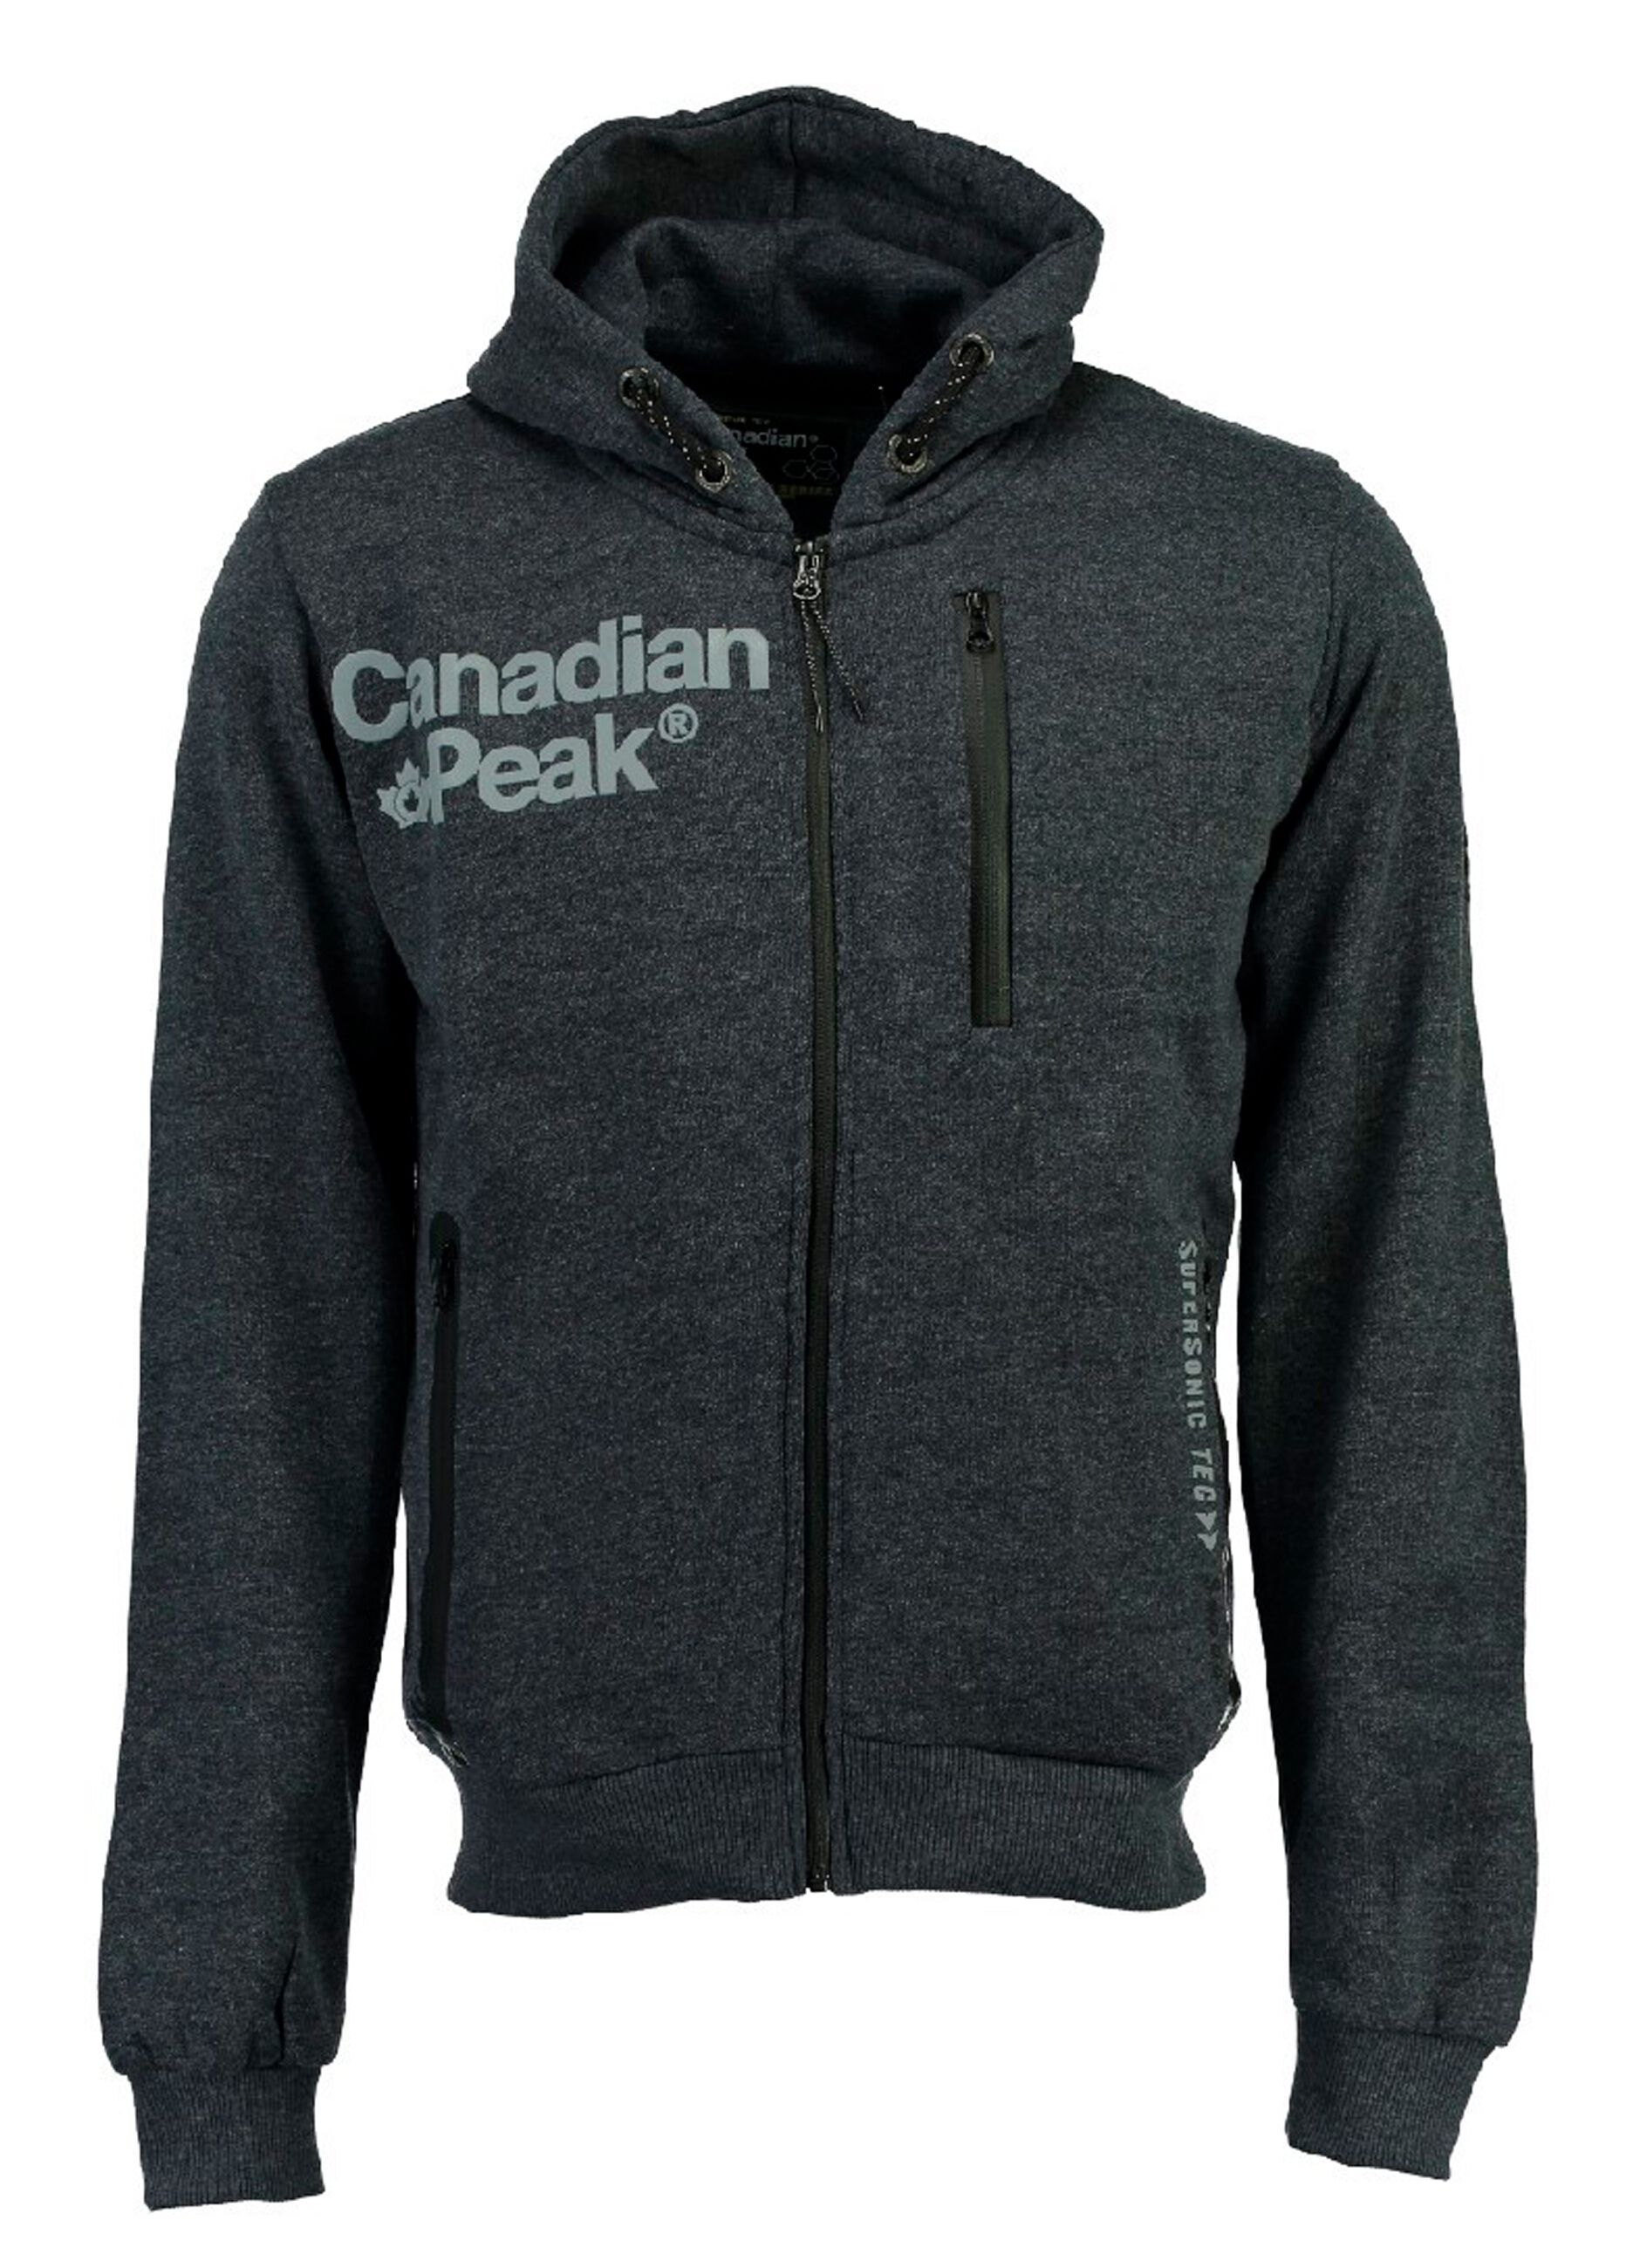 Canadian Peak full-zip sweatshirt with hood